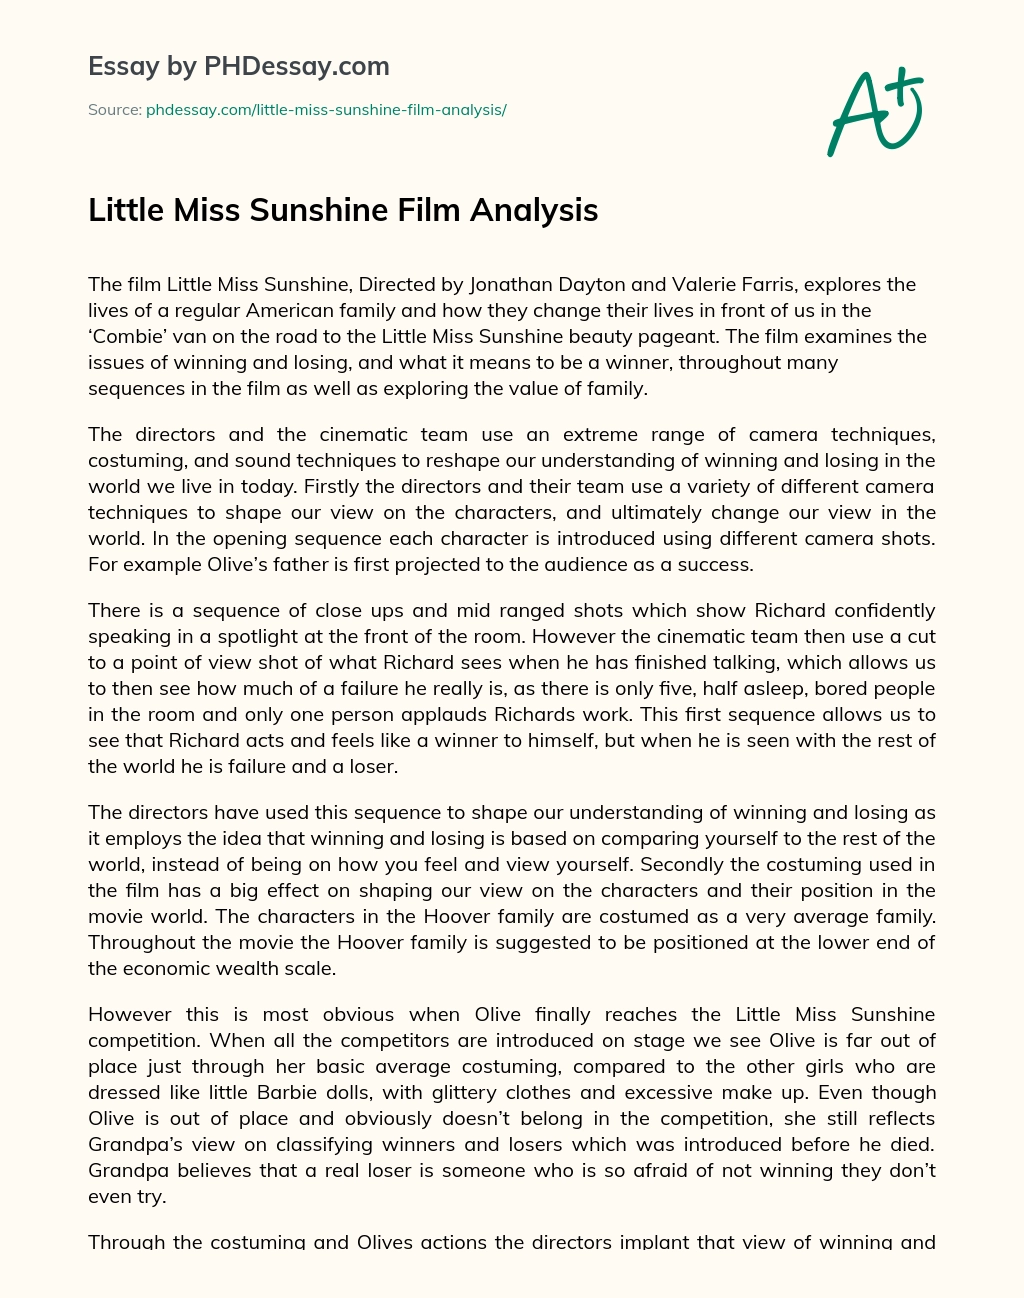 Little Miss Sunshine Film Analysis essay